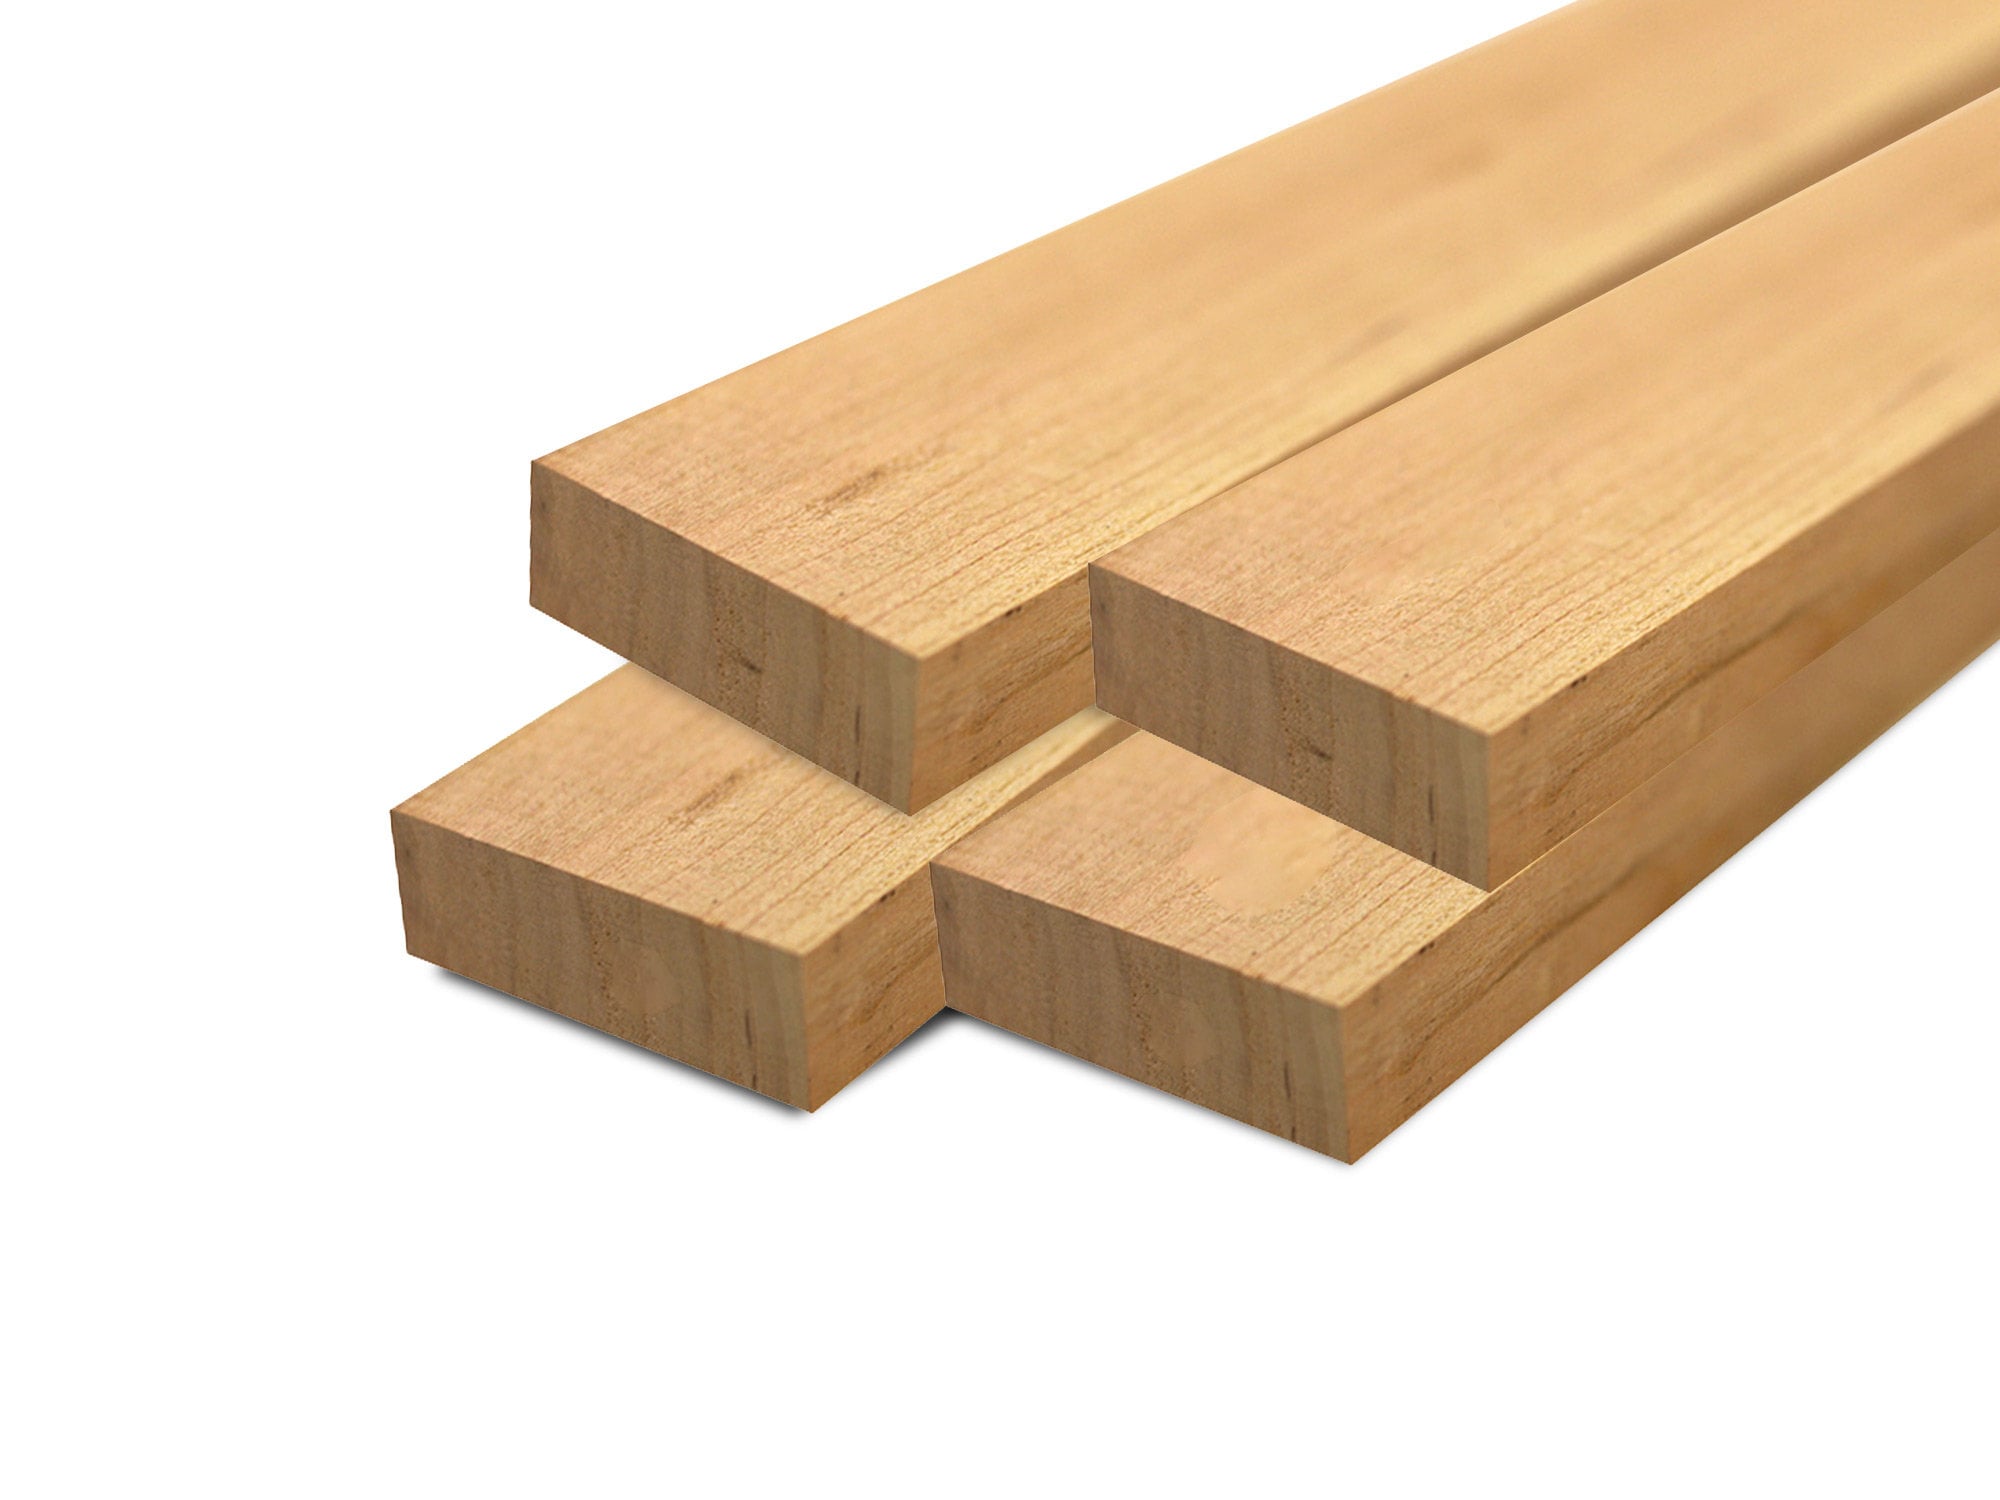 CHERRY 1/4 x 8 x 12 Thin Wood Lumber Board Scroll Craft Pack of